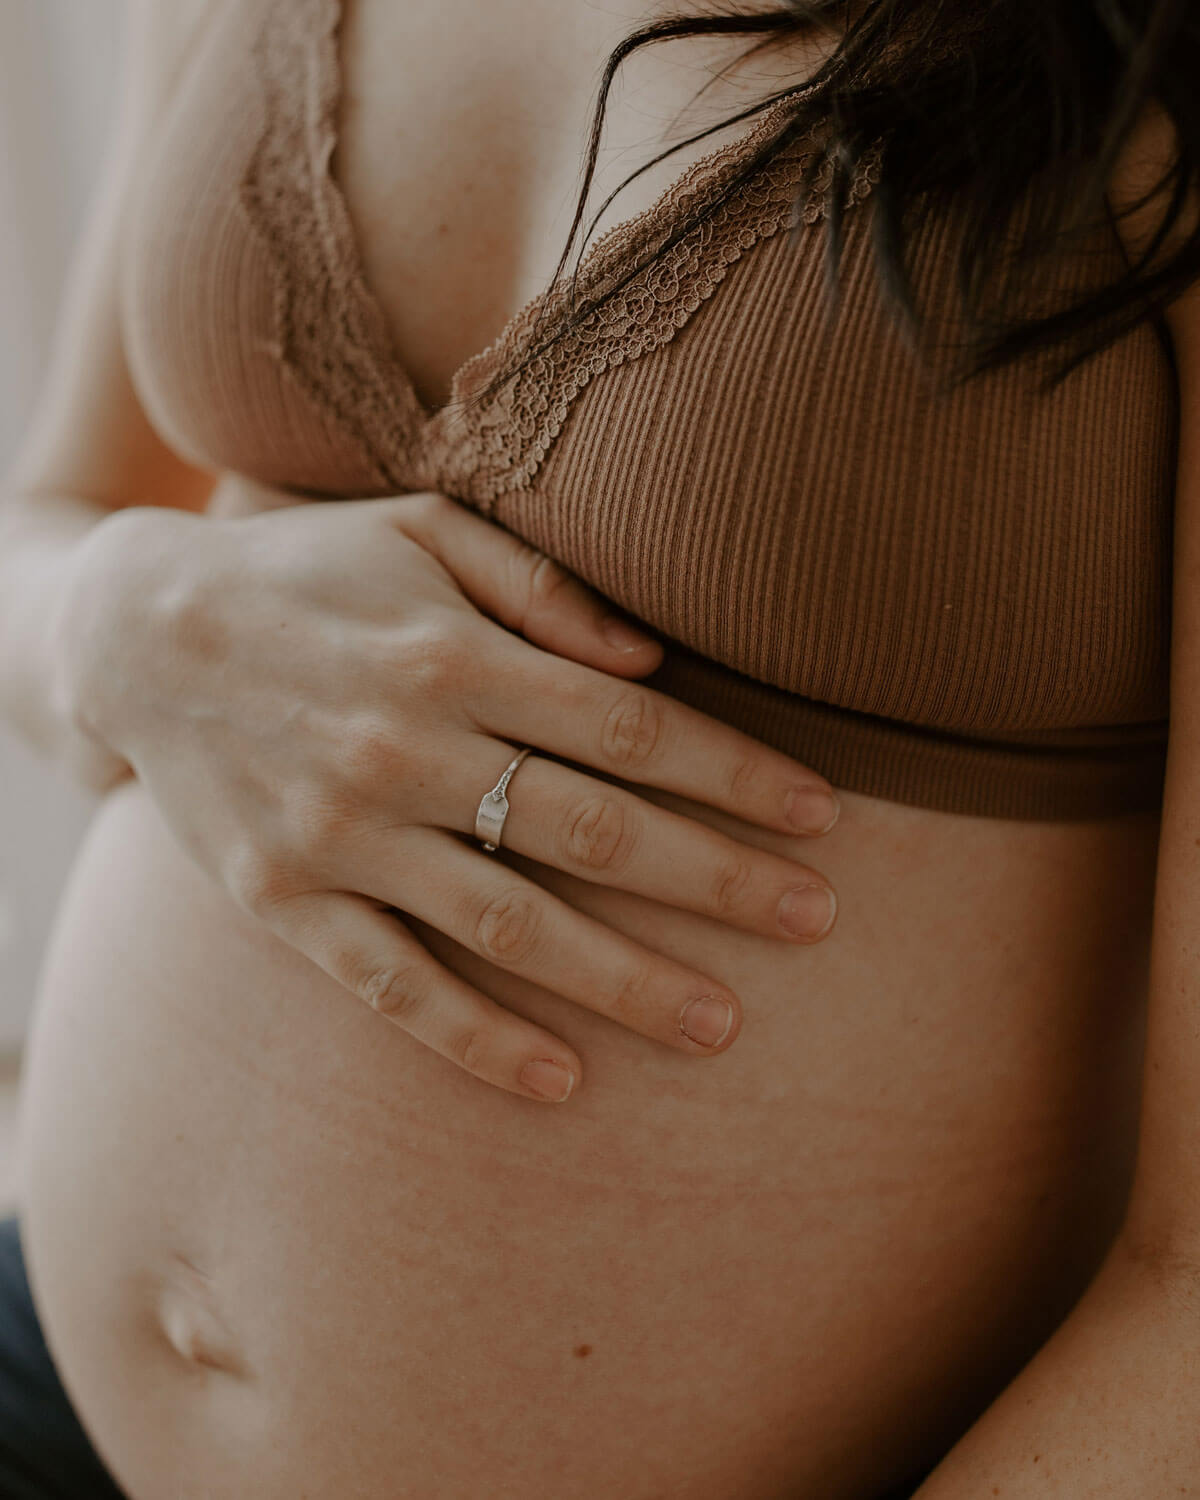 Women Post Pregnancy Lifting Bra Wirefree Breastfeeding Maternity